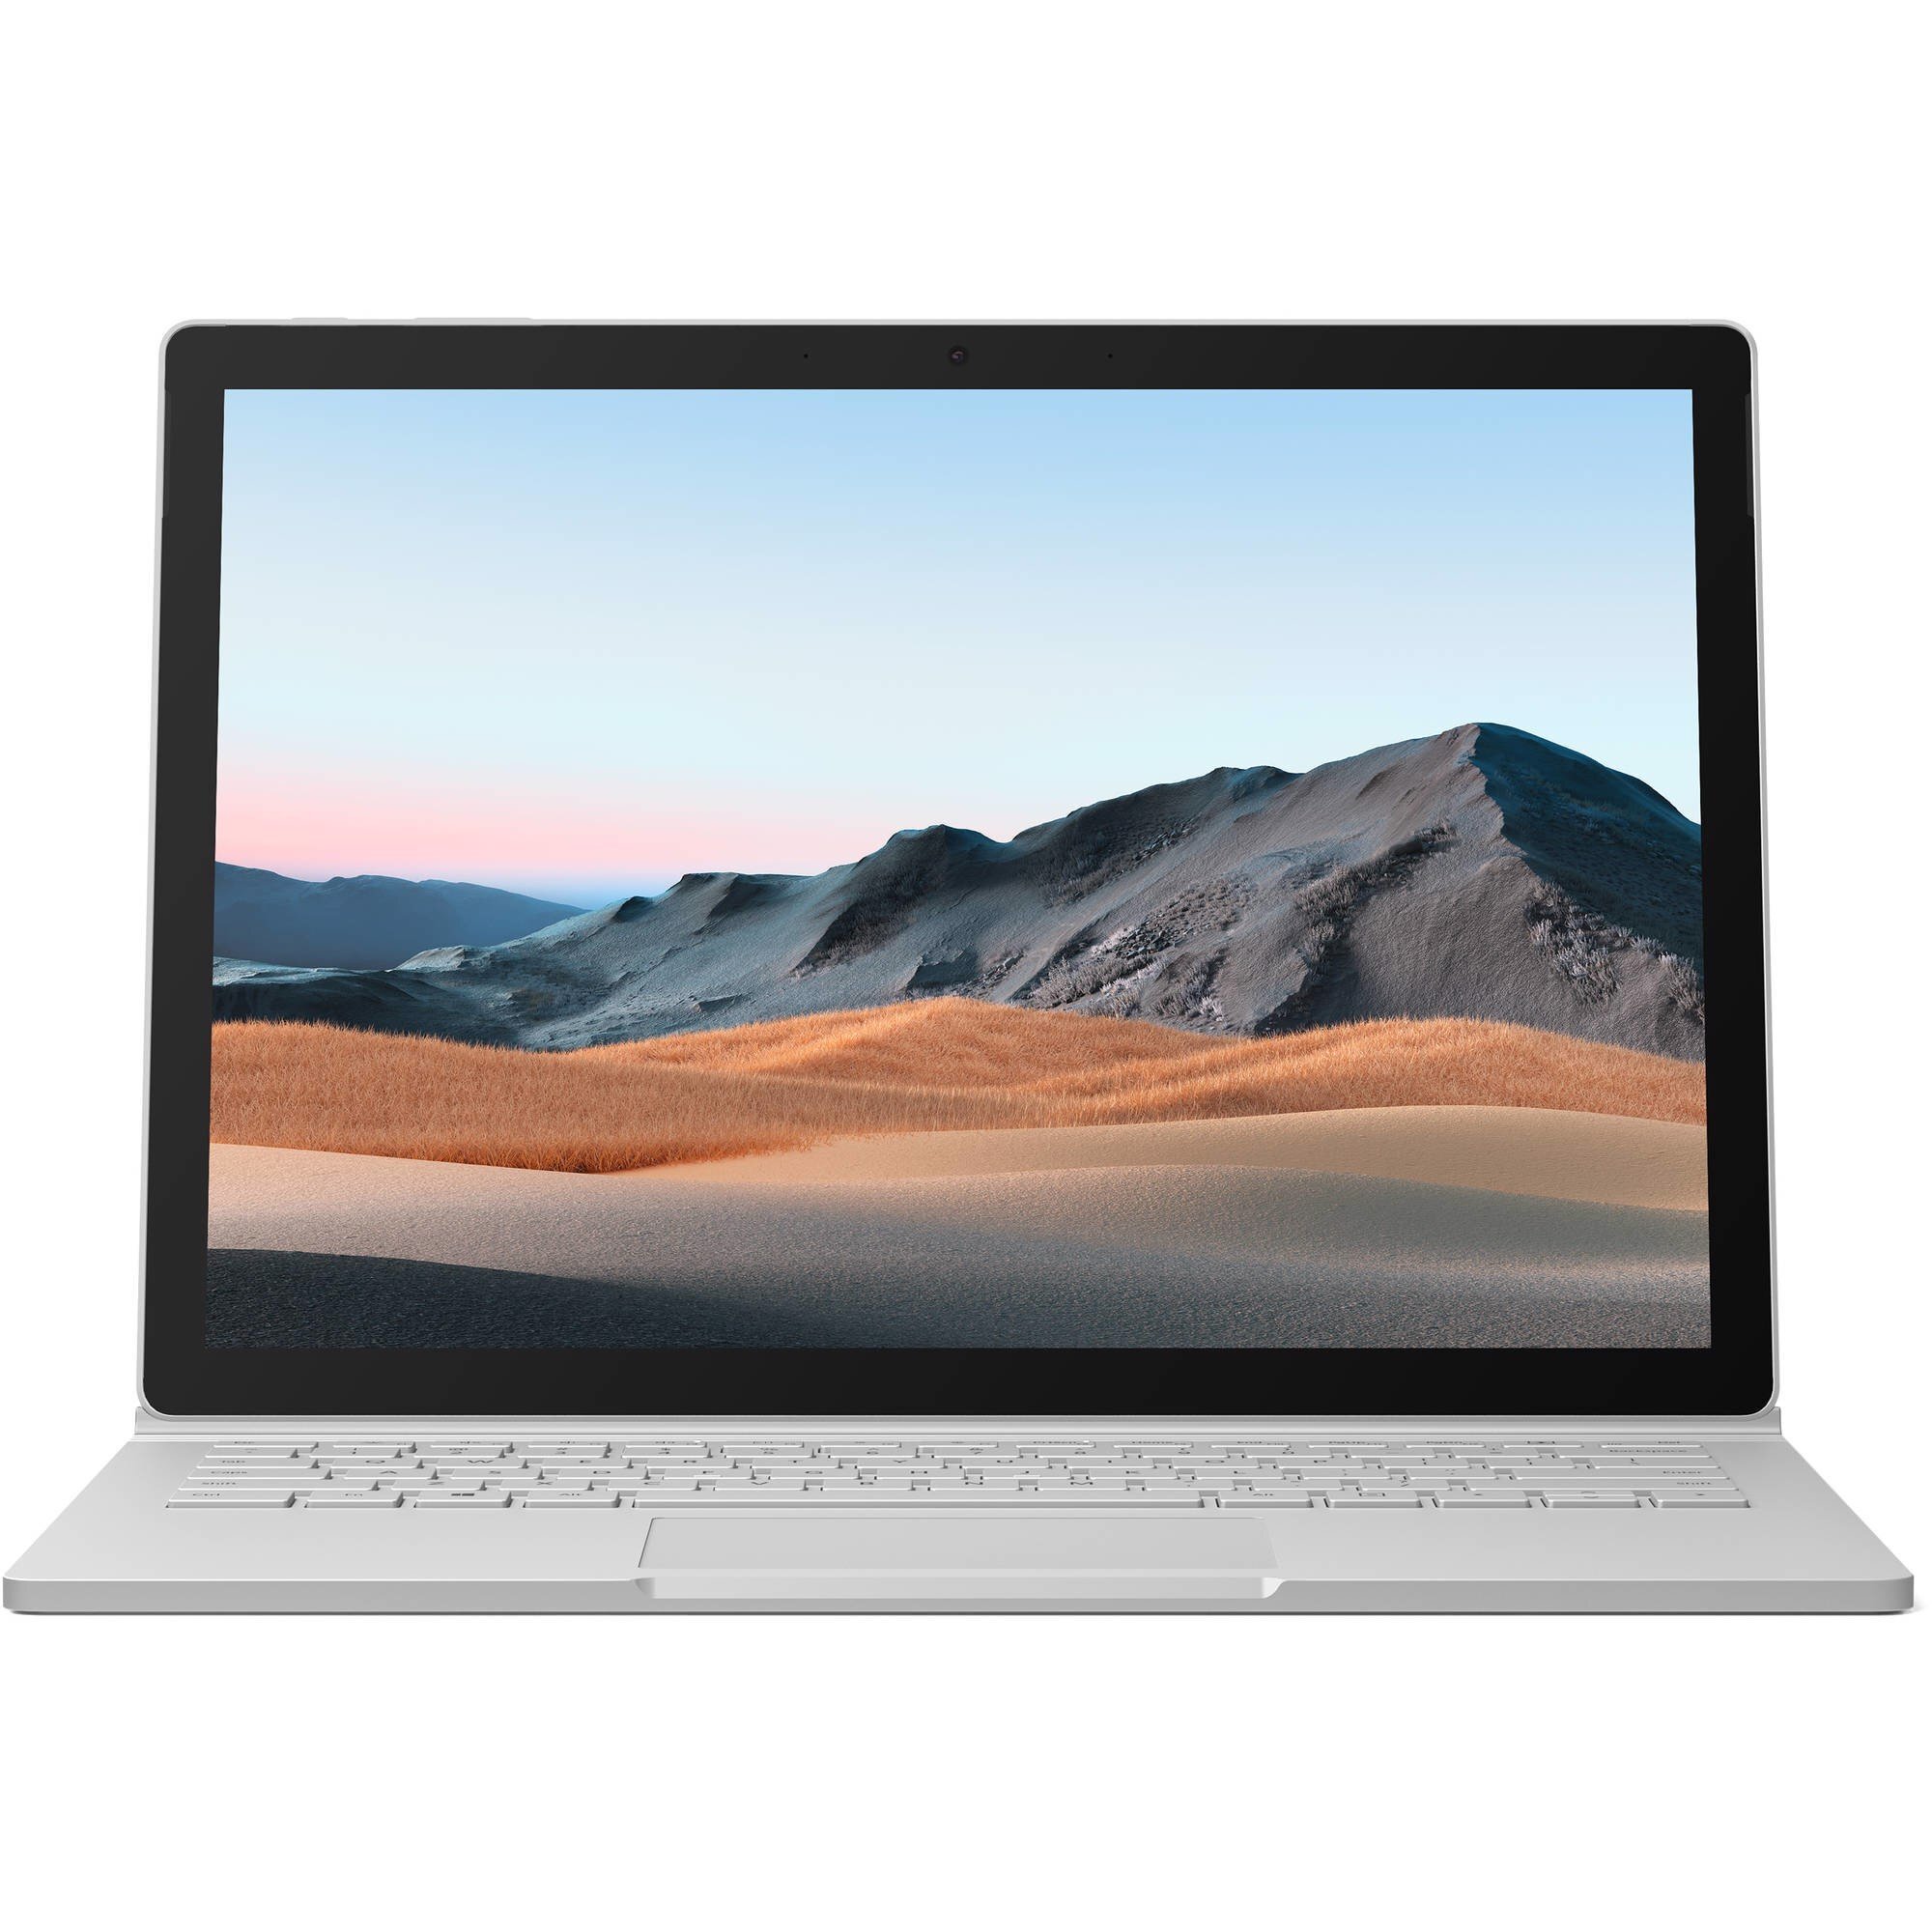 Laptop Microsoft Surface Book 3 - Intel Core I7-1065G7, 16GB RAM, SSD 256GB, Nvidia GeForce GTX 1660 Ti 6GB GDDR6, 15 inch